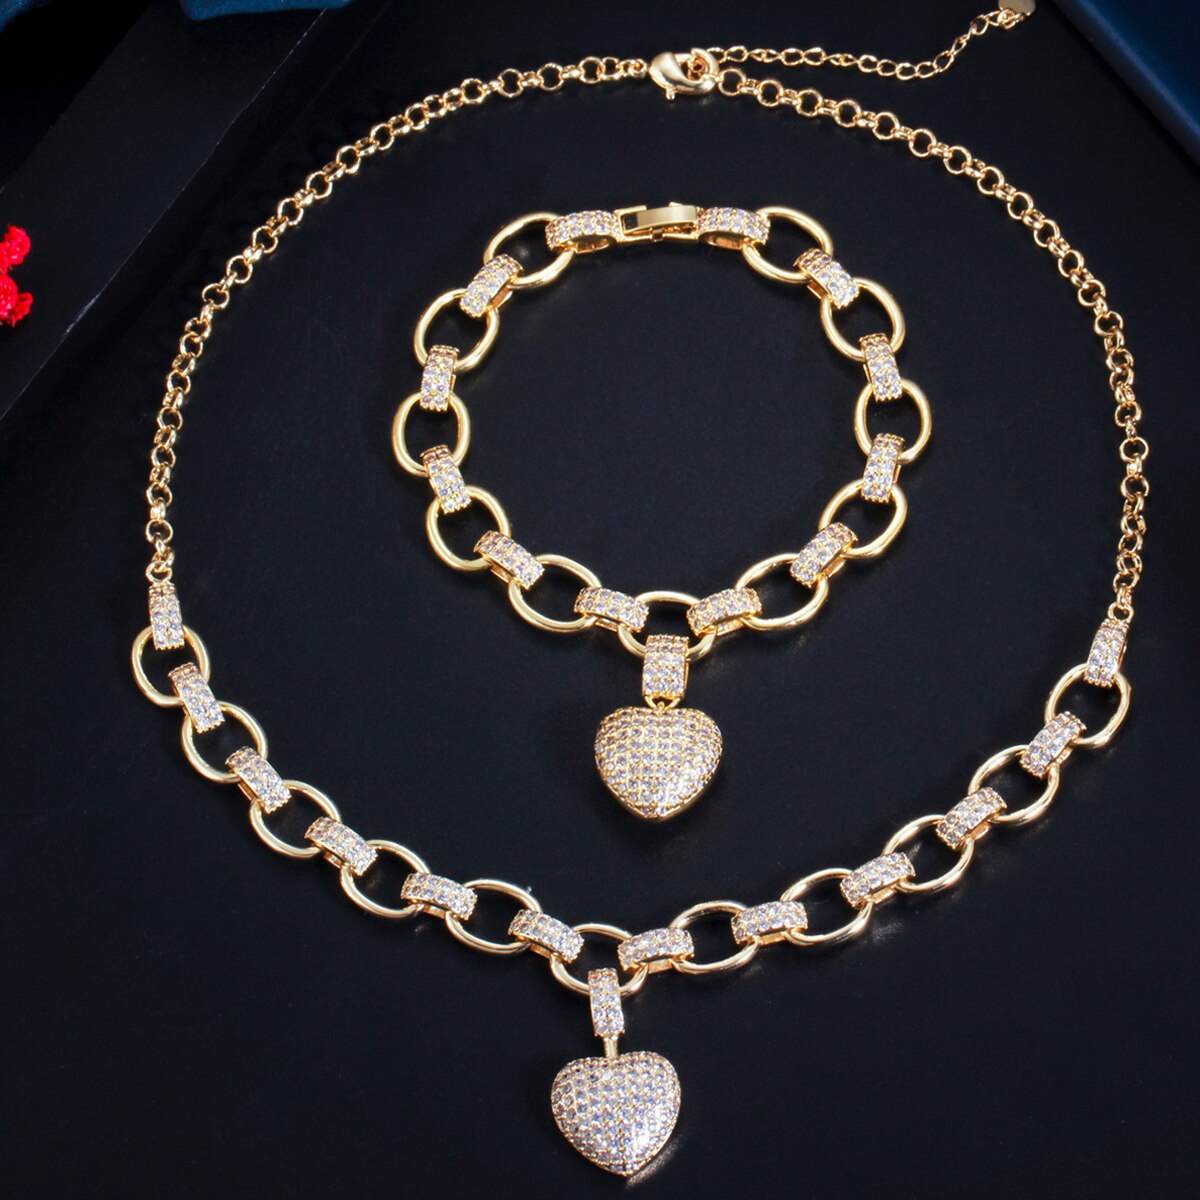 ThreeGraces-Luxury-Cubic-Zirconia-Stone-Yellow-Gold-Color-Love-Heart-Pendant-Necklace-Bracelet-Set-f-1005003297996366-7